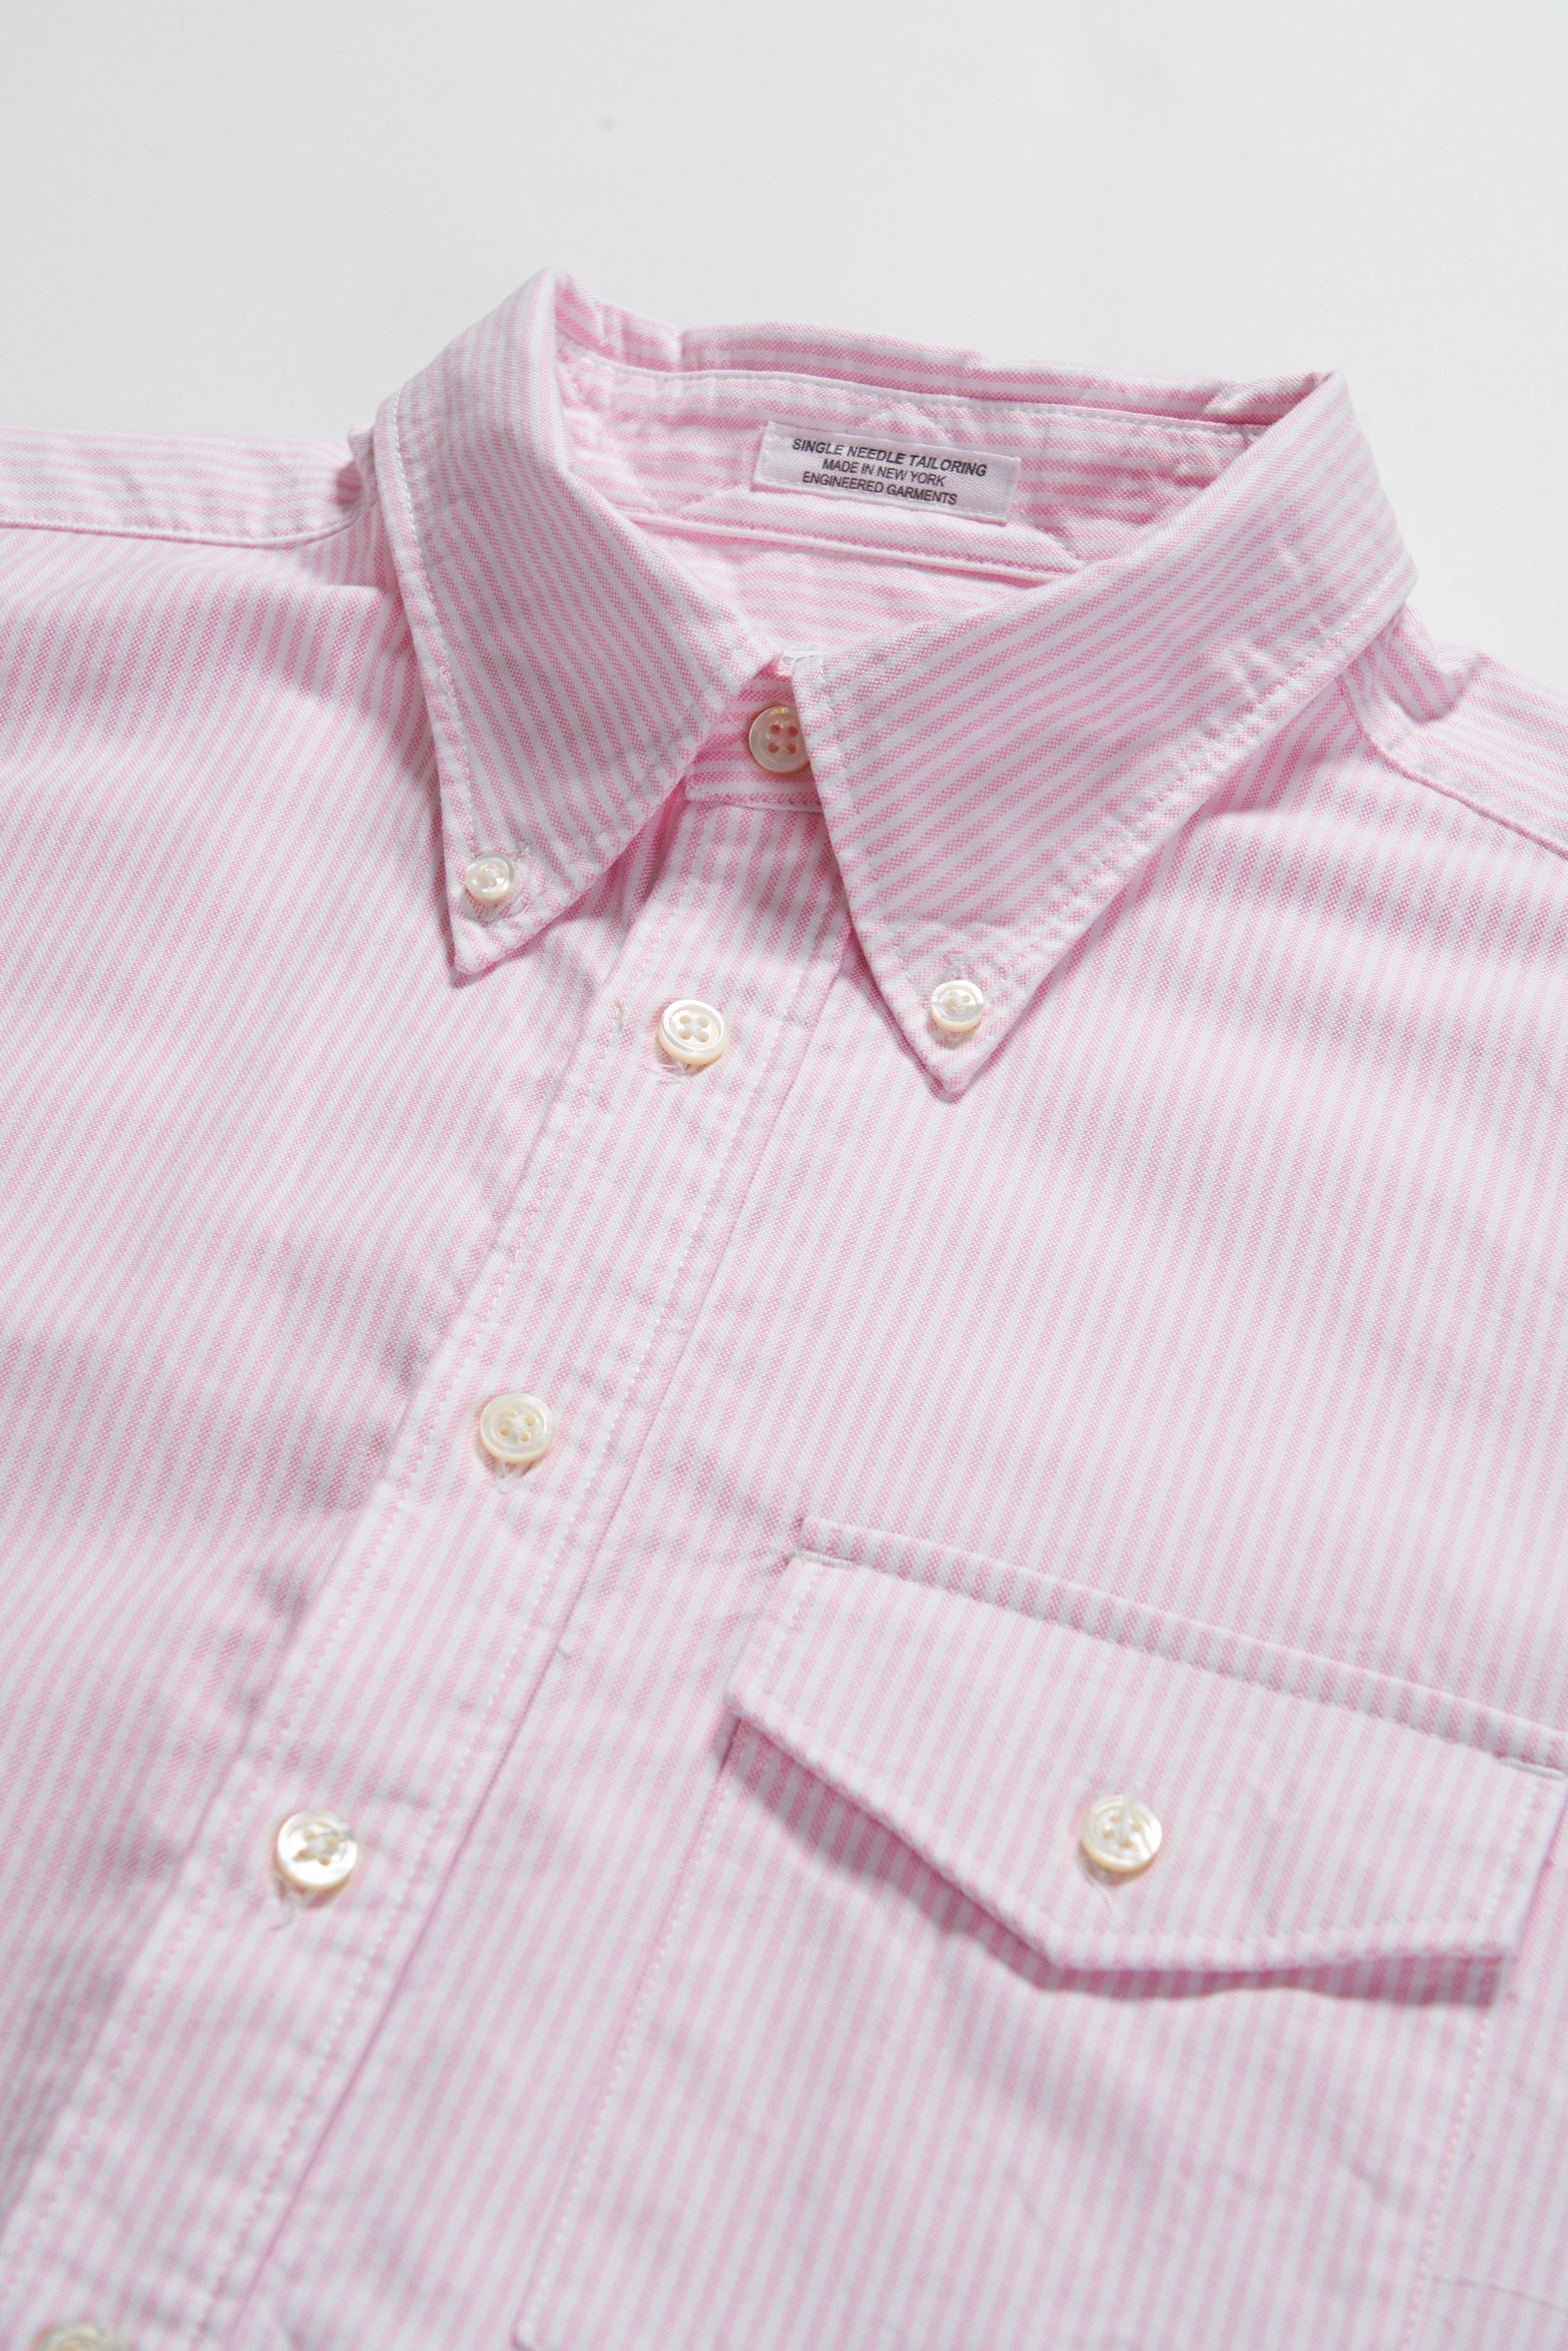 Engineered Garments IVY BD Shirt - Pink Candy Stripe Oxford